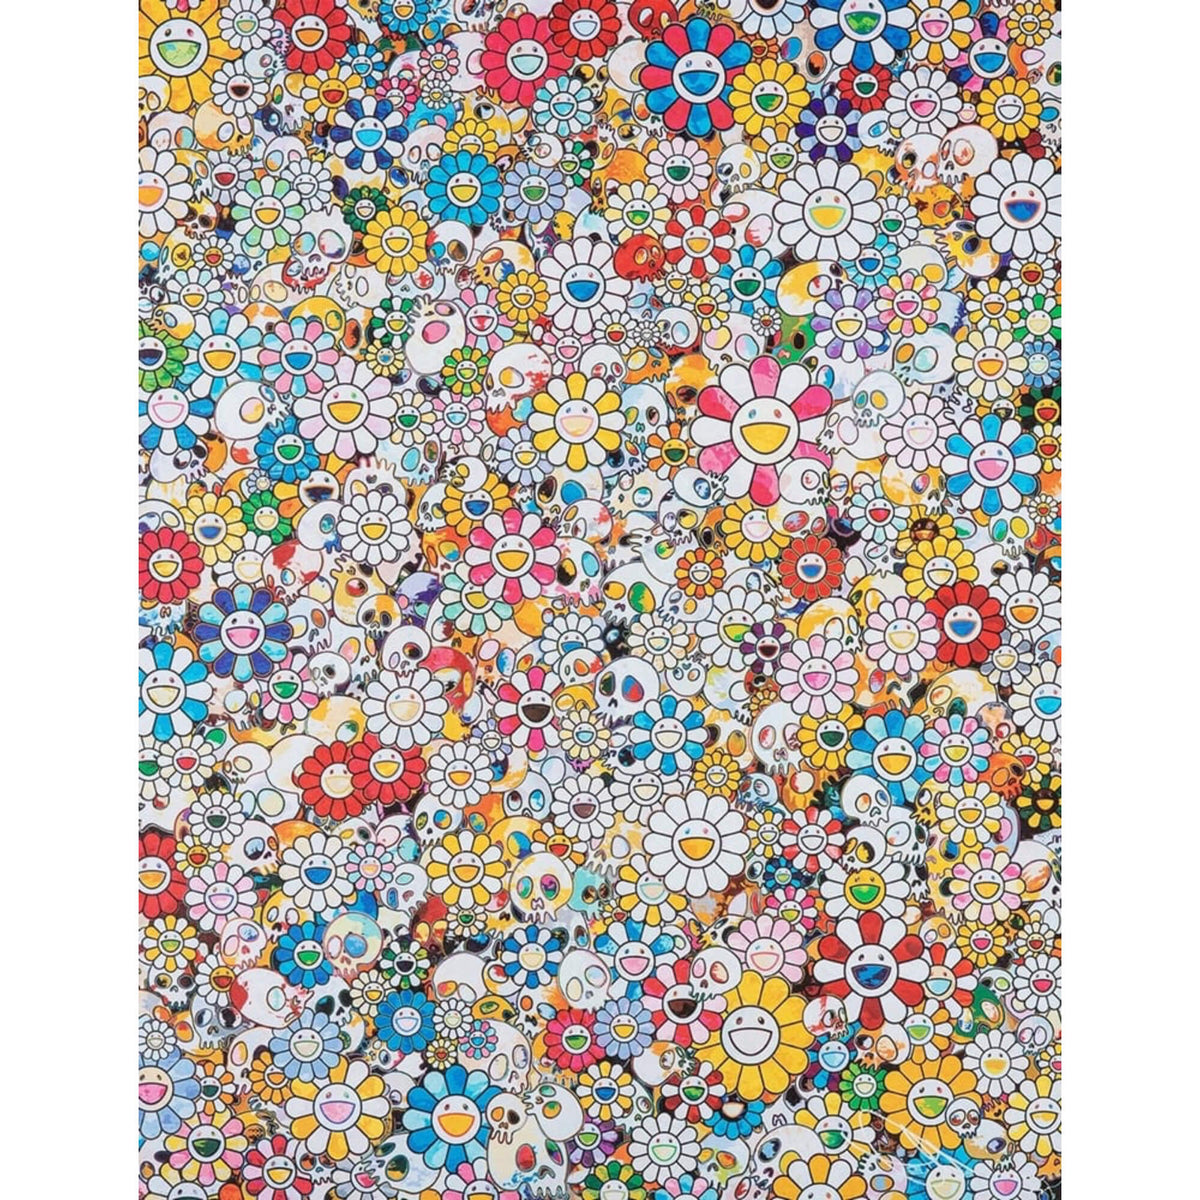 Christies - 7 things to know about Japanese artist Takashi Murakami